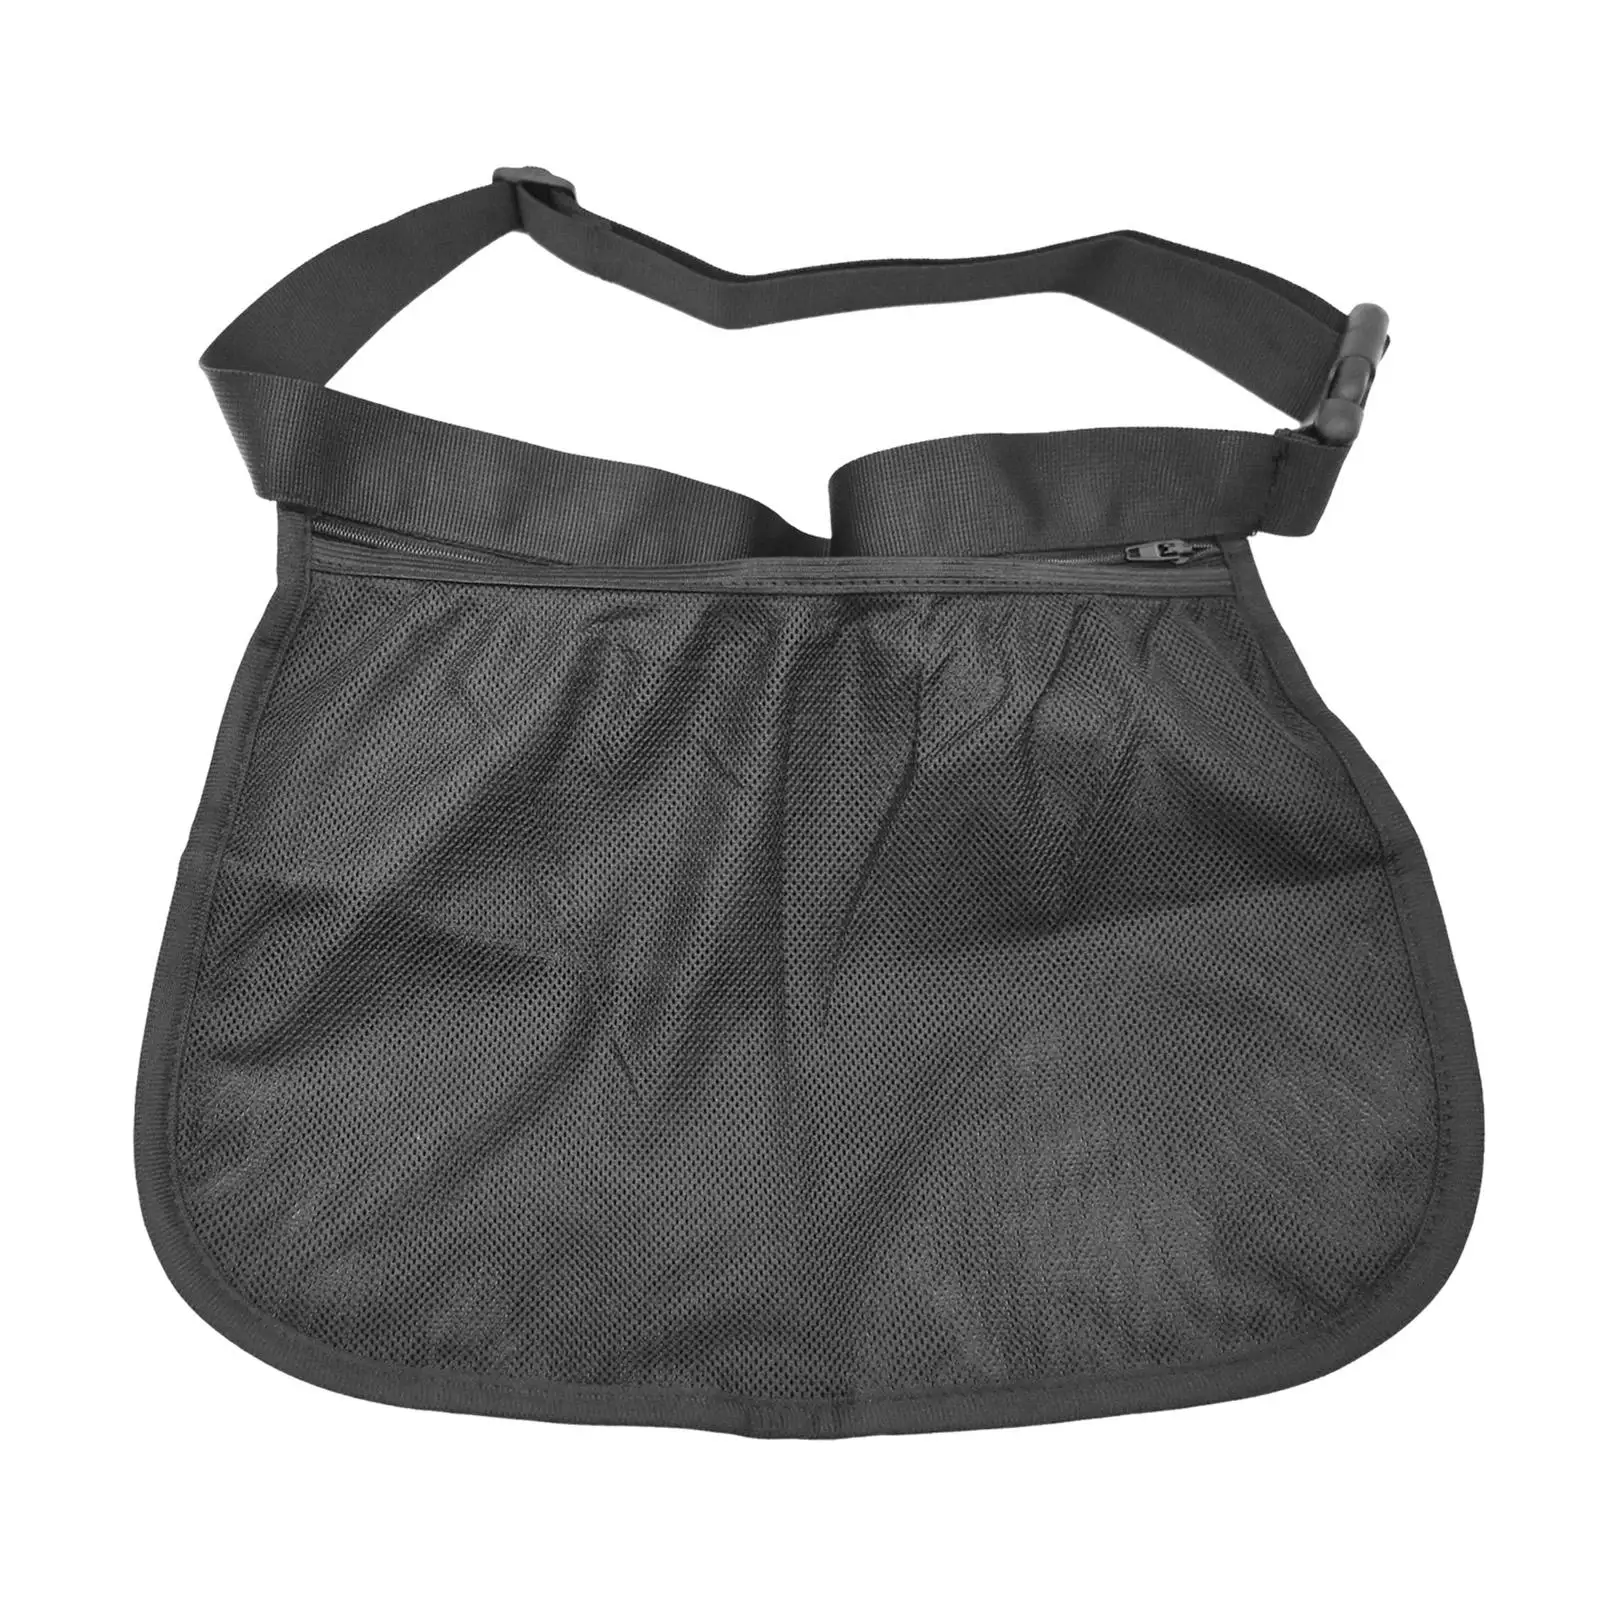 Black Tennis Ball Holder Waist Hip Bag Waist Pocket Outdoor Ball Storage Bag for Storing Balls and Phones Fitness Exercise